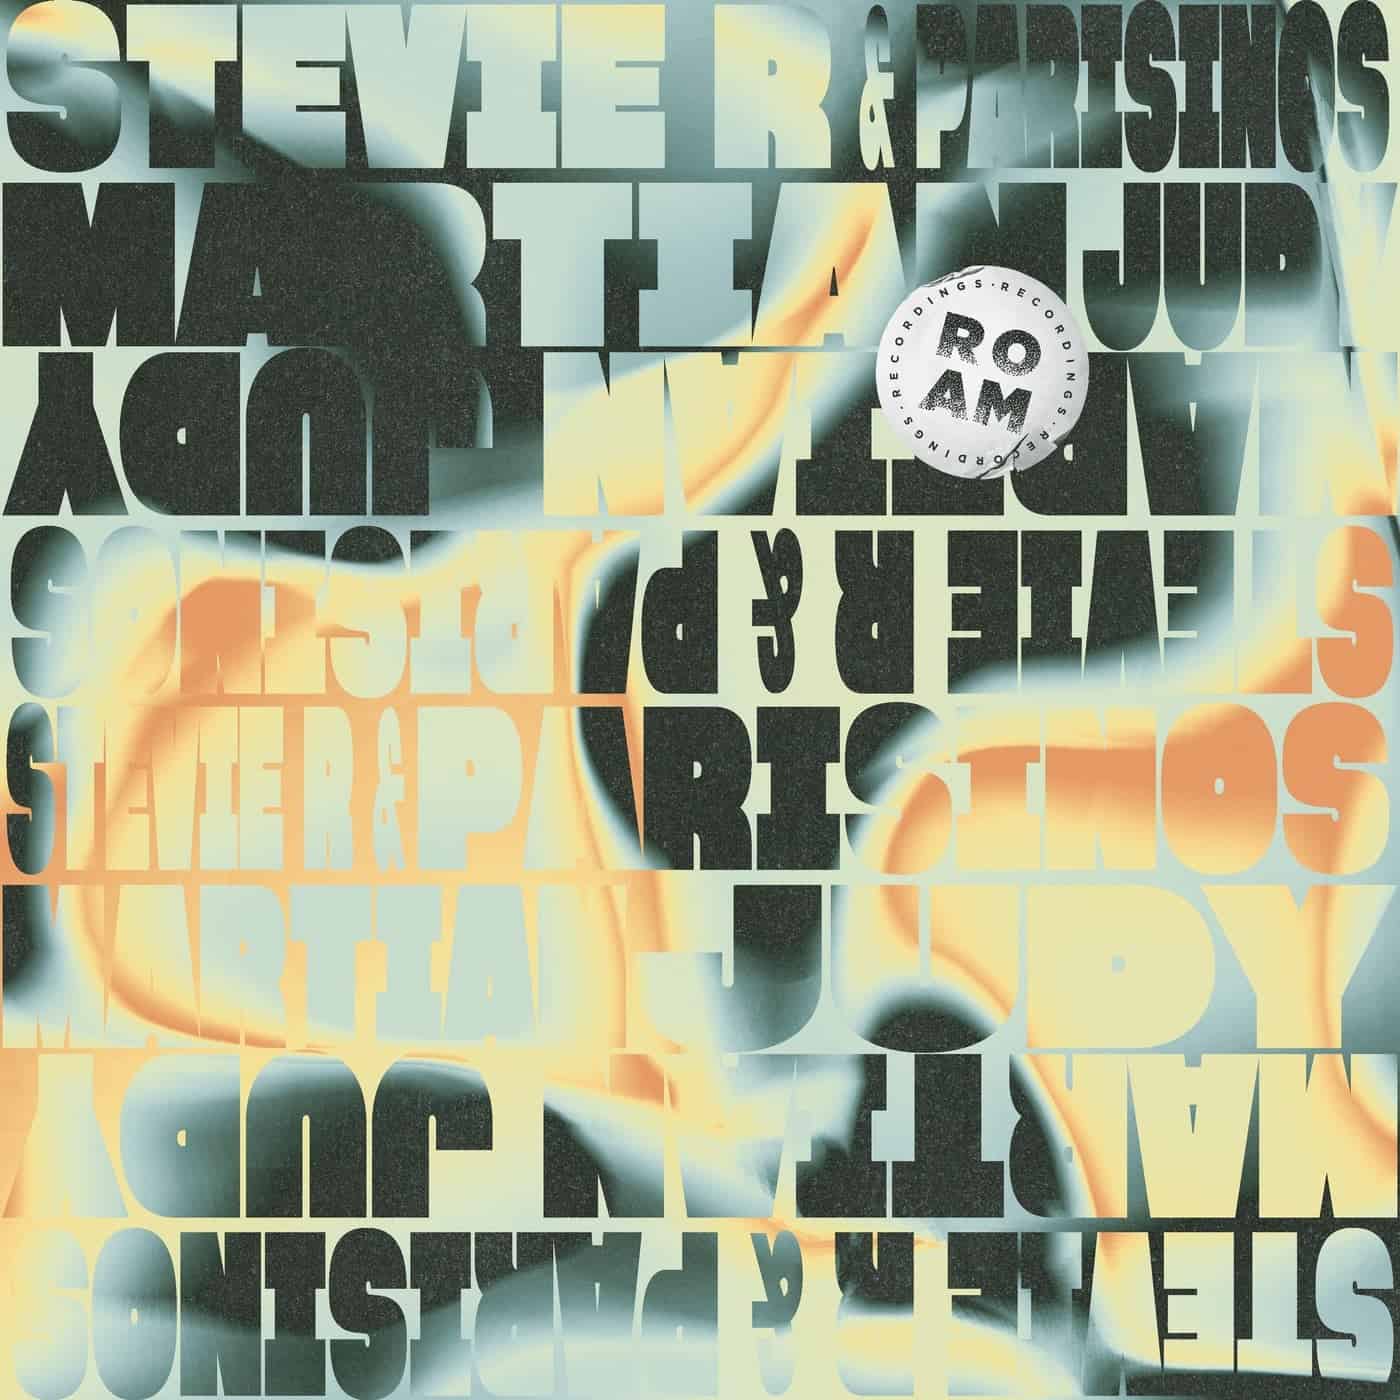 Download Stevie R, Parisinos - Martian Judy on Electrobuzz